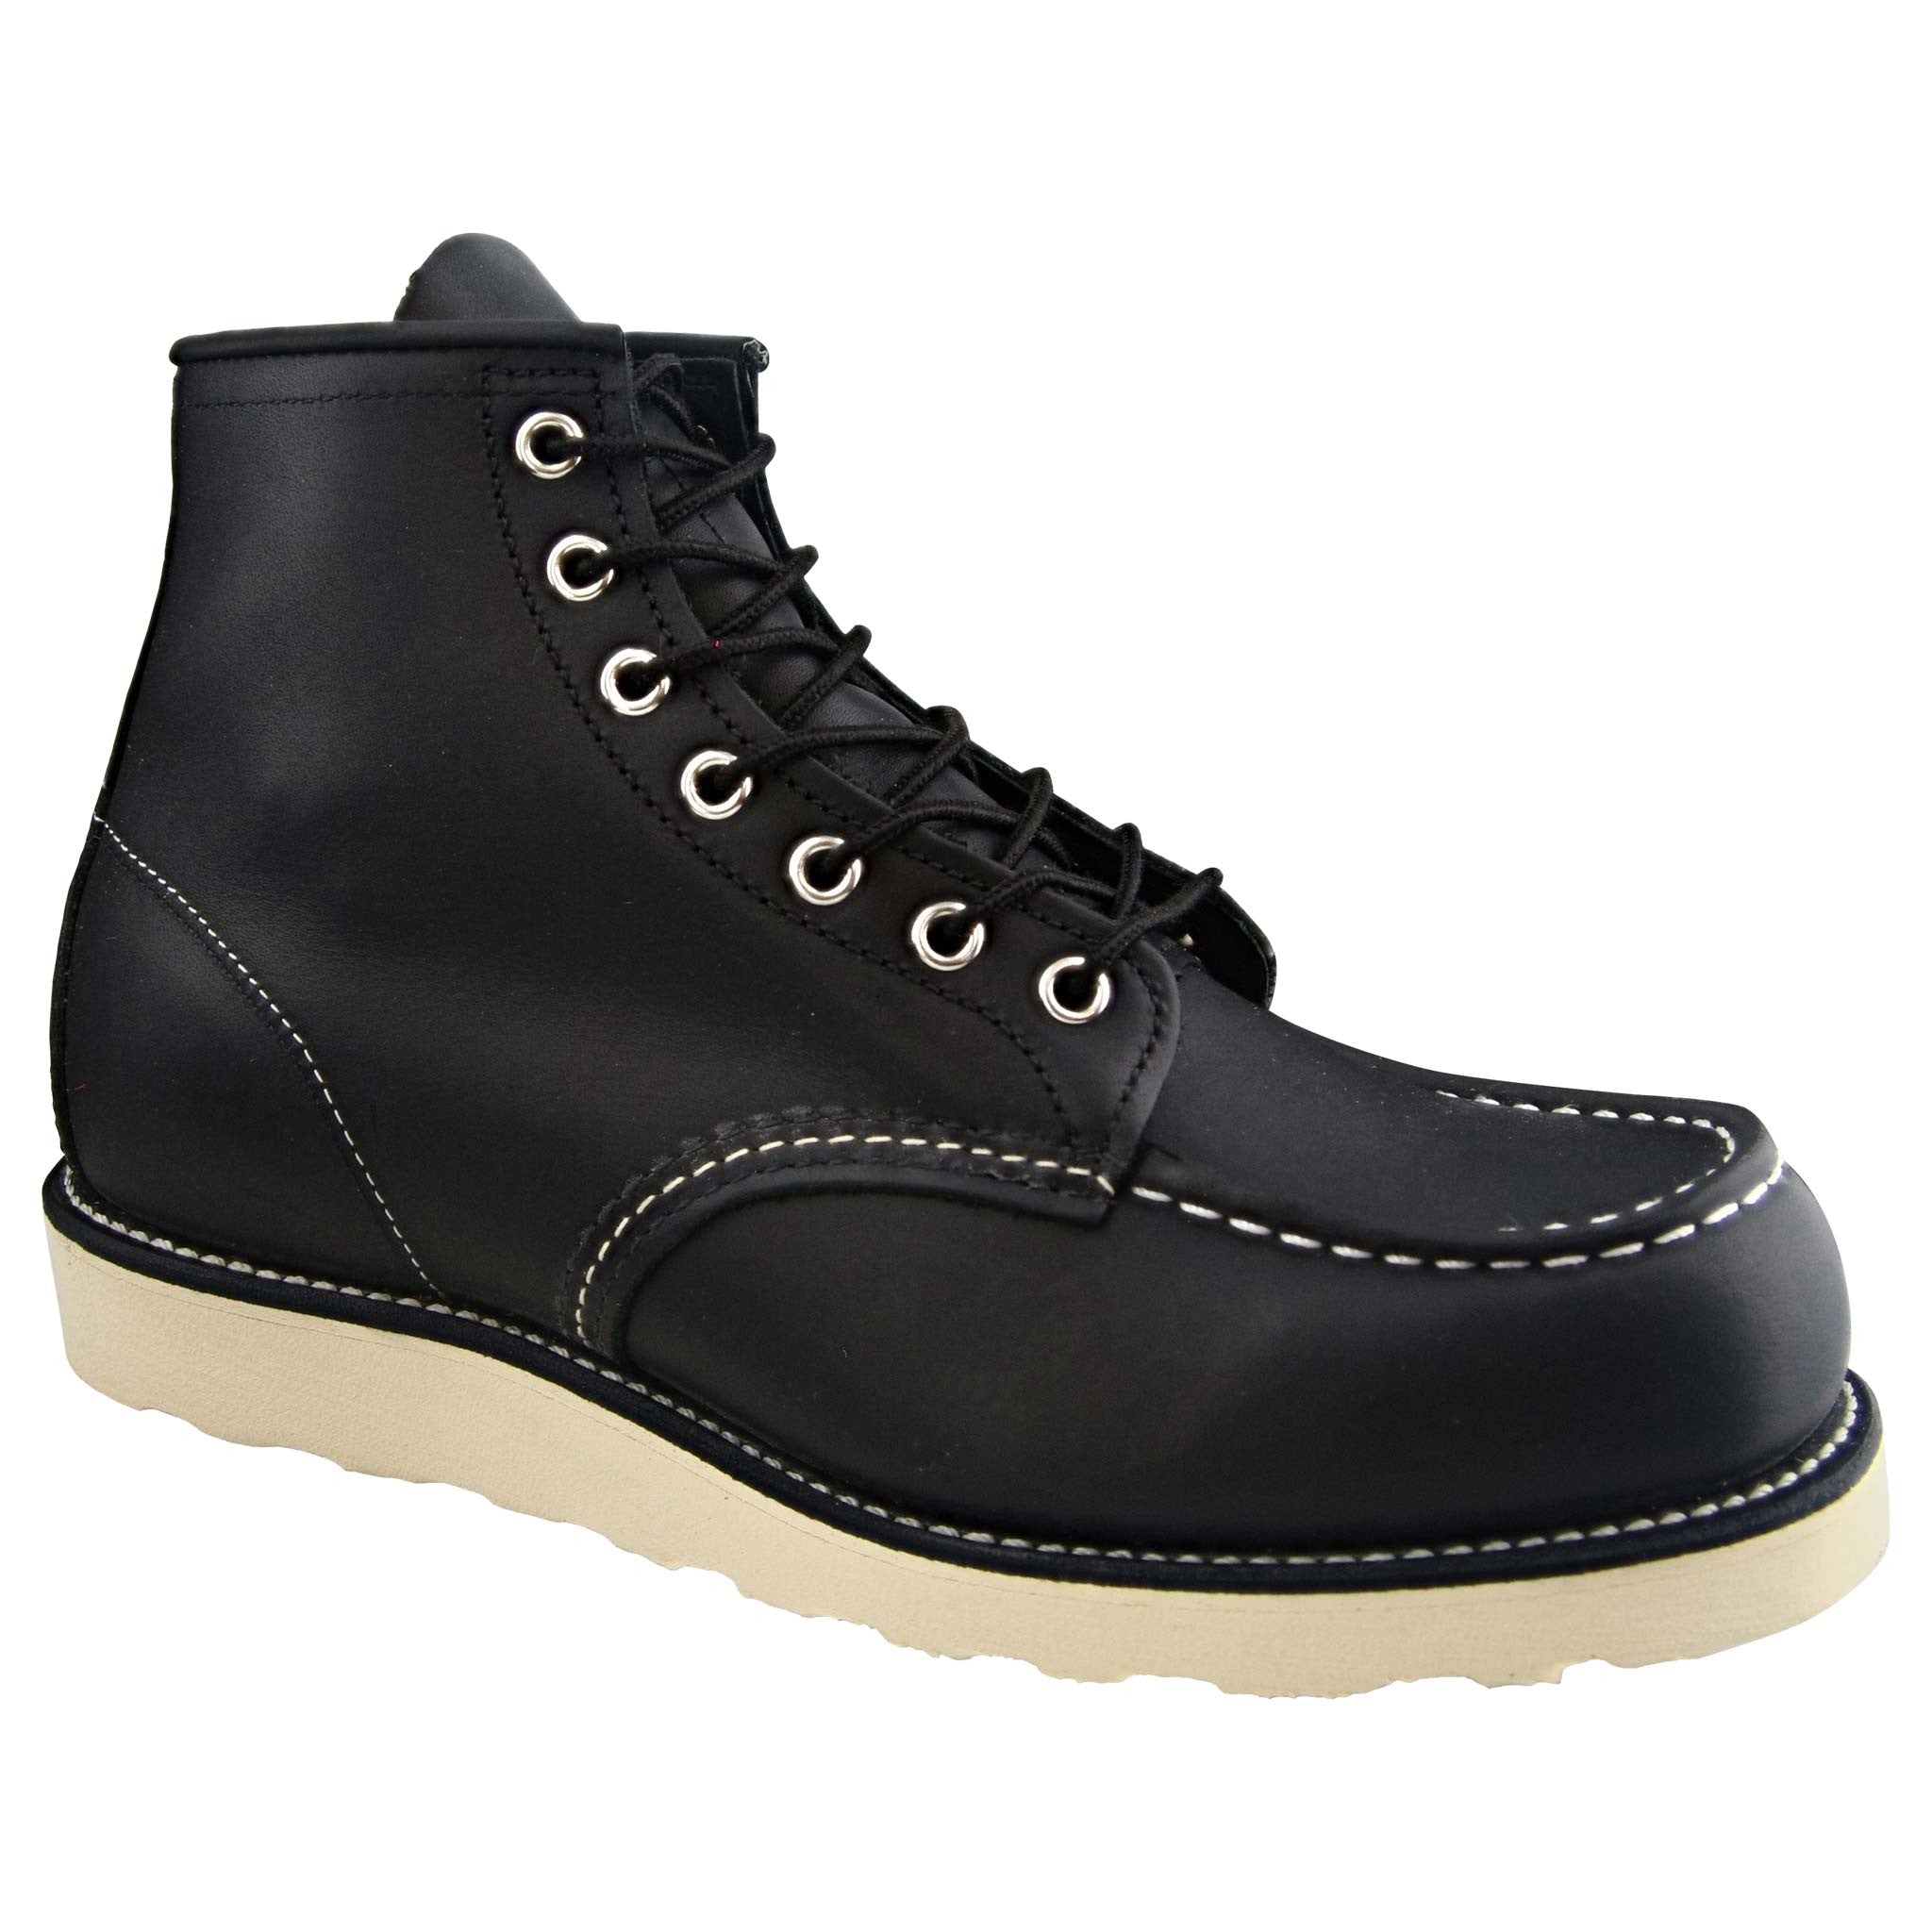 moc toe black boots